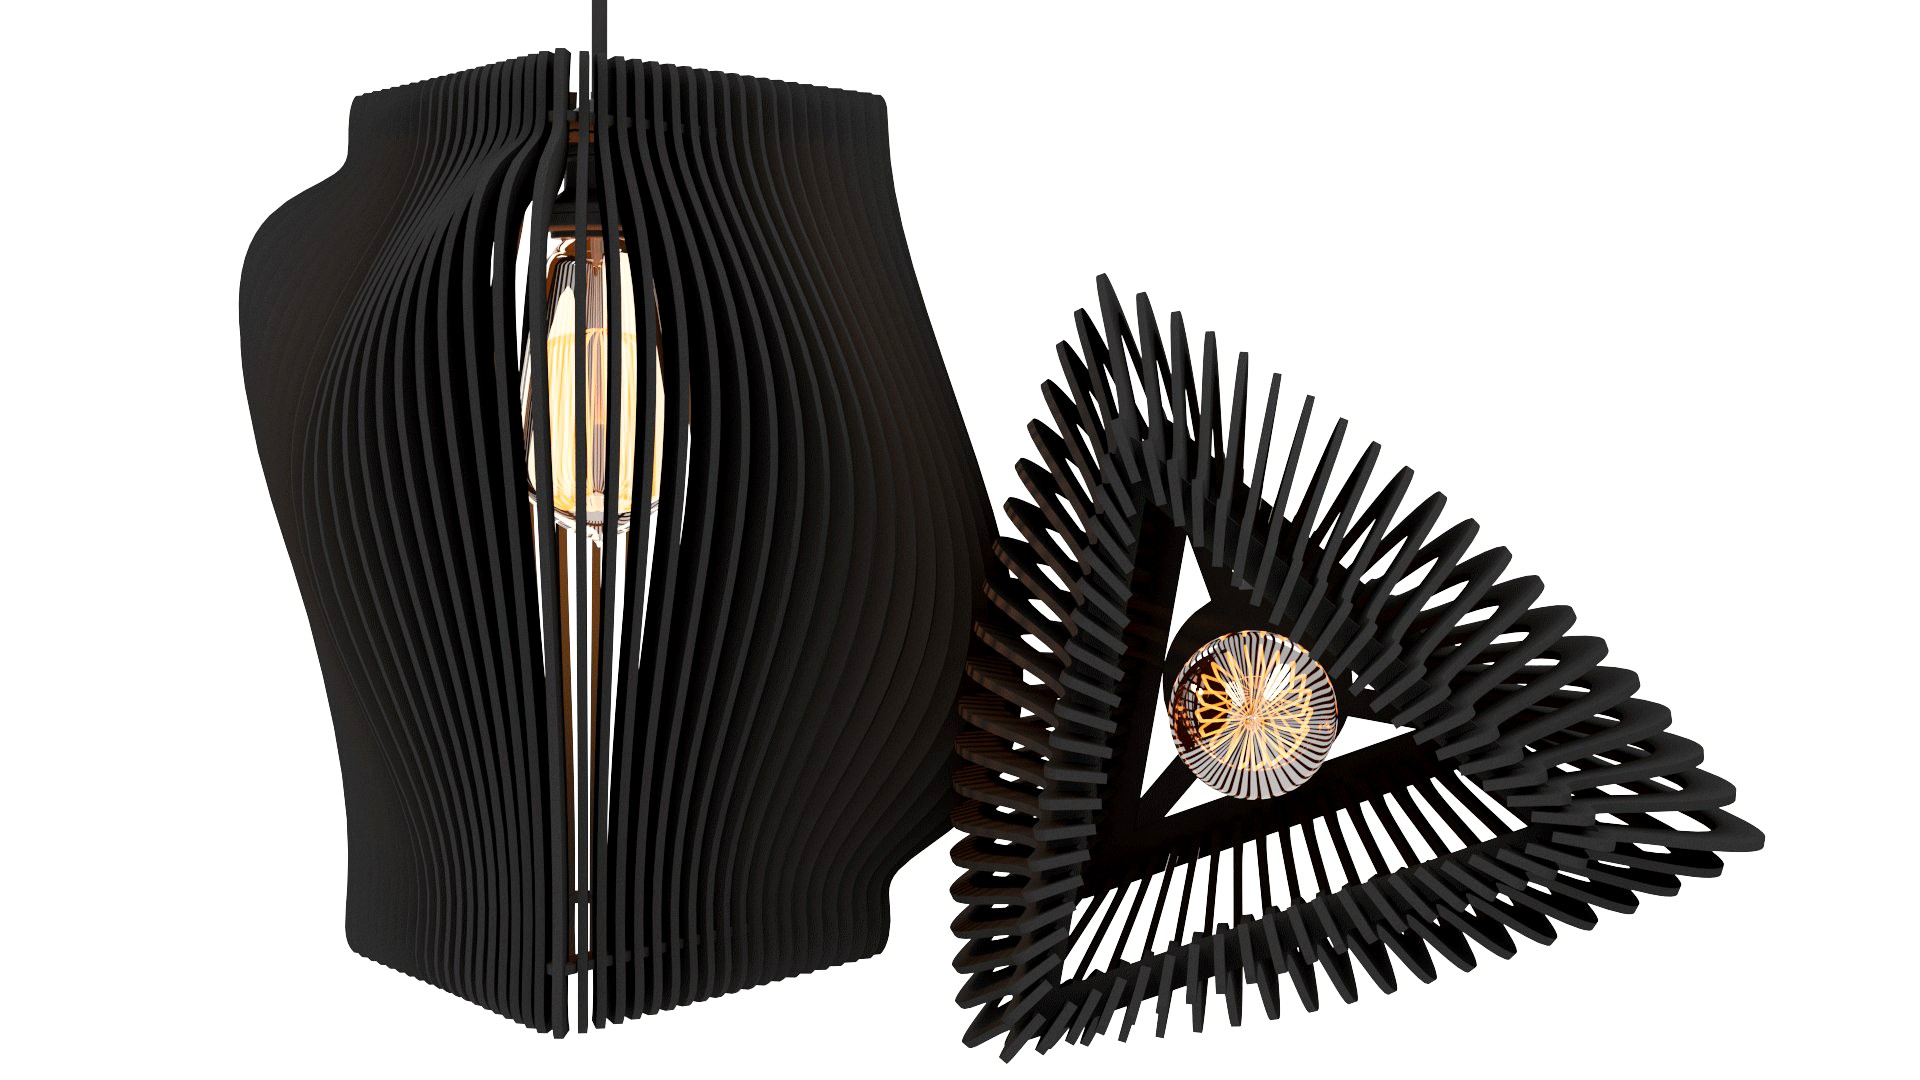 Wooden chandelier - Modern design with edison light bulb